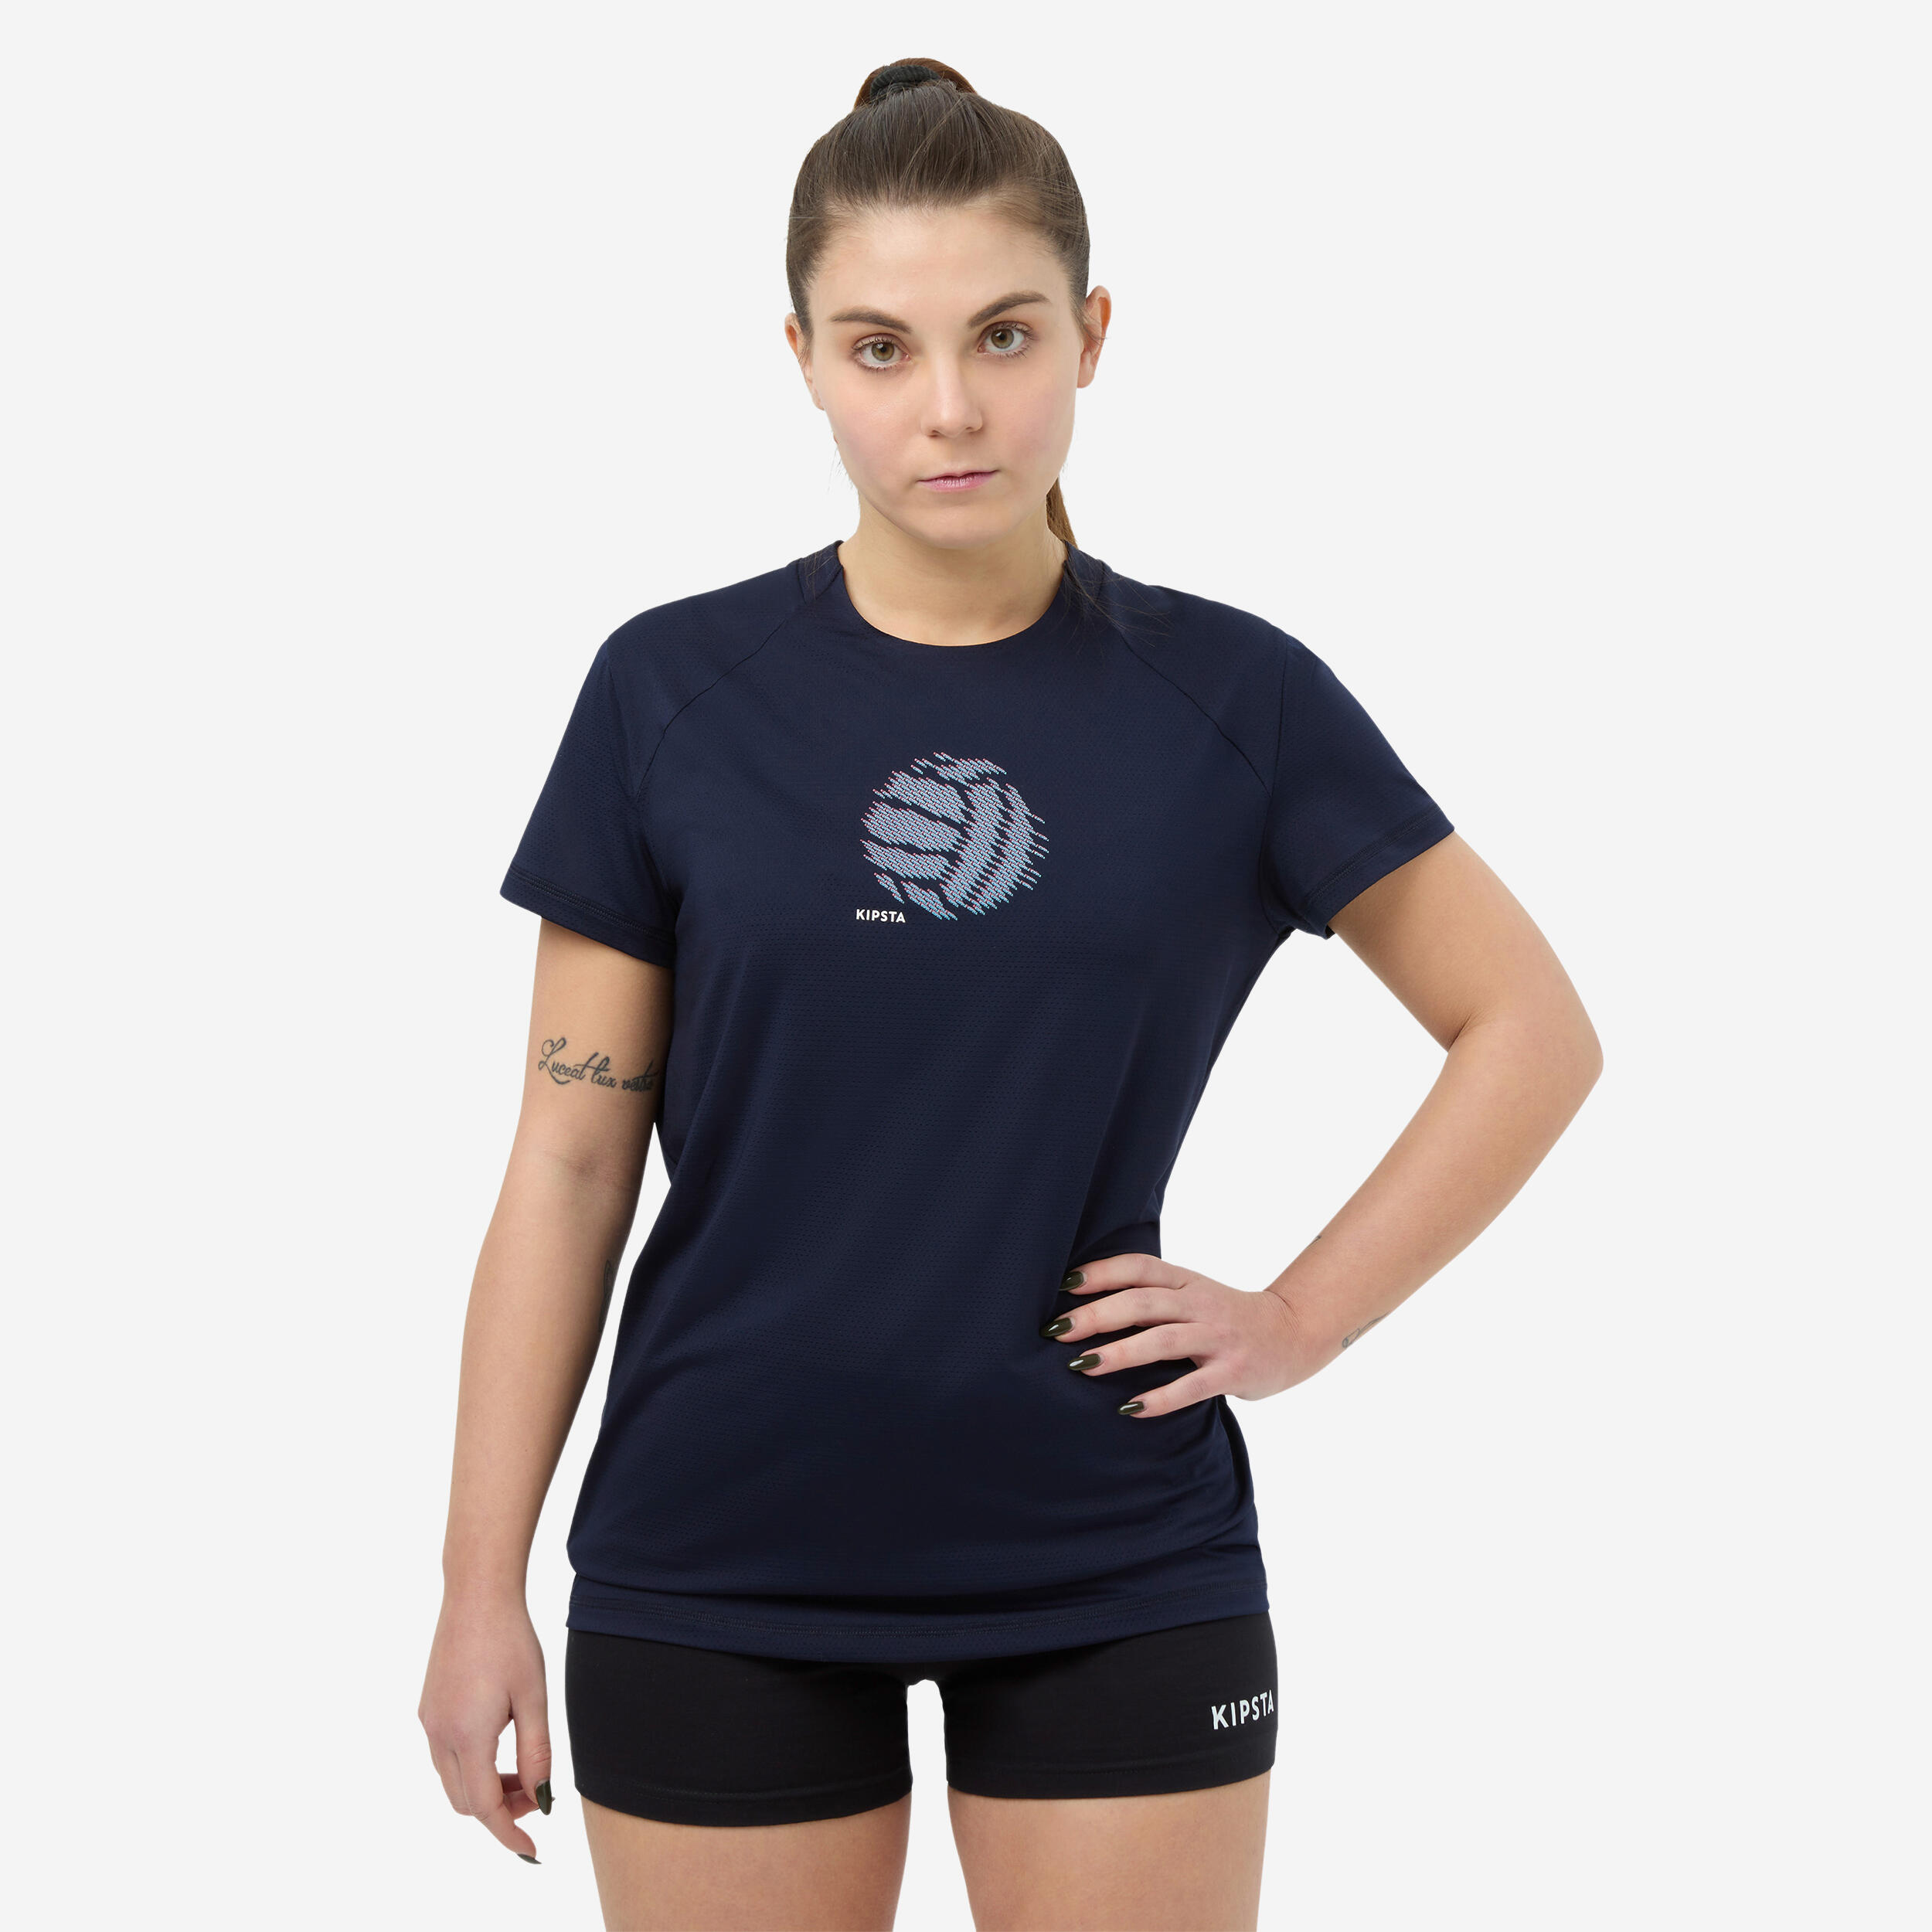 ALLSIX Women's Volleyball Training Jersey - Navy